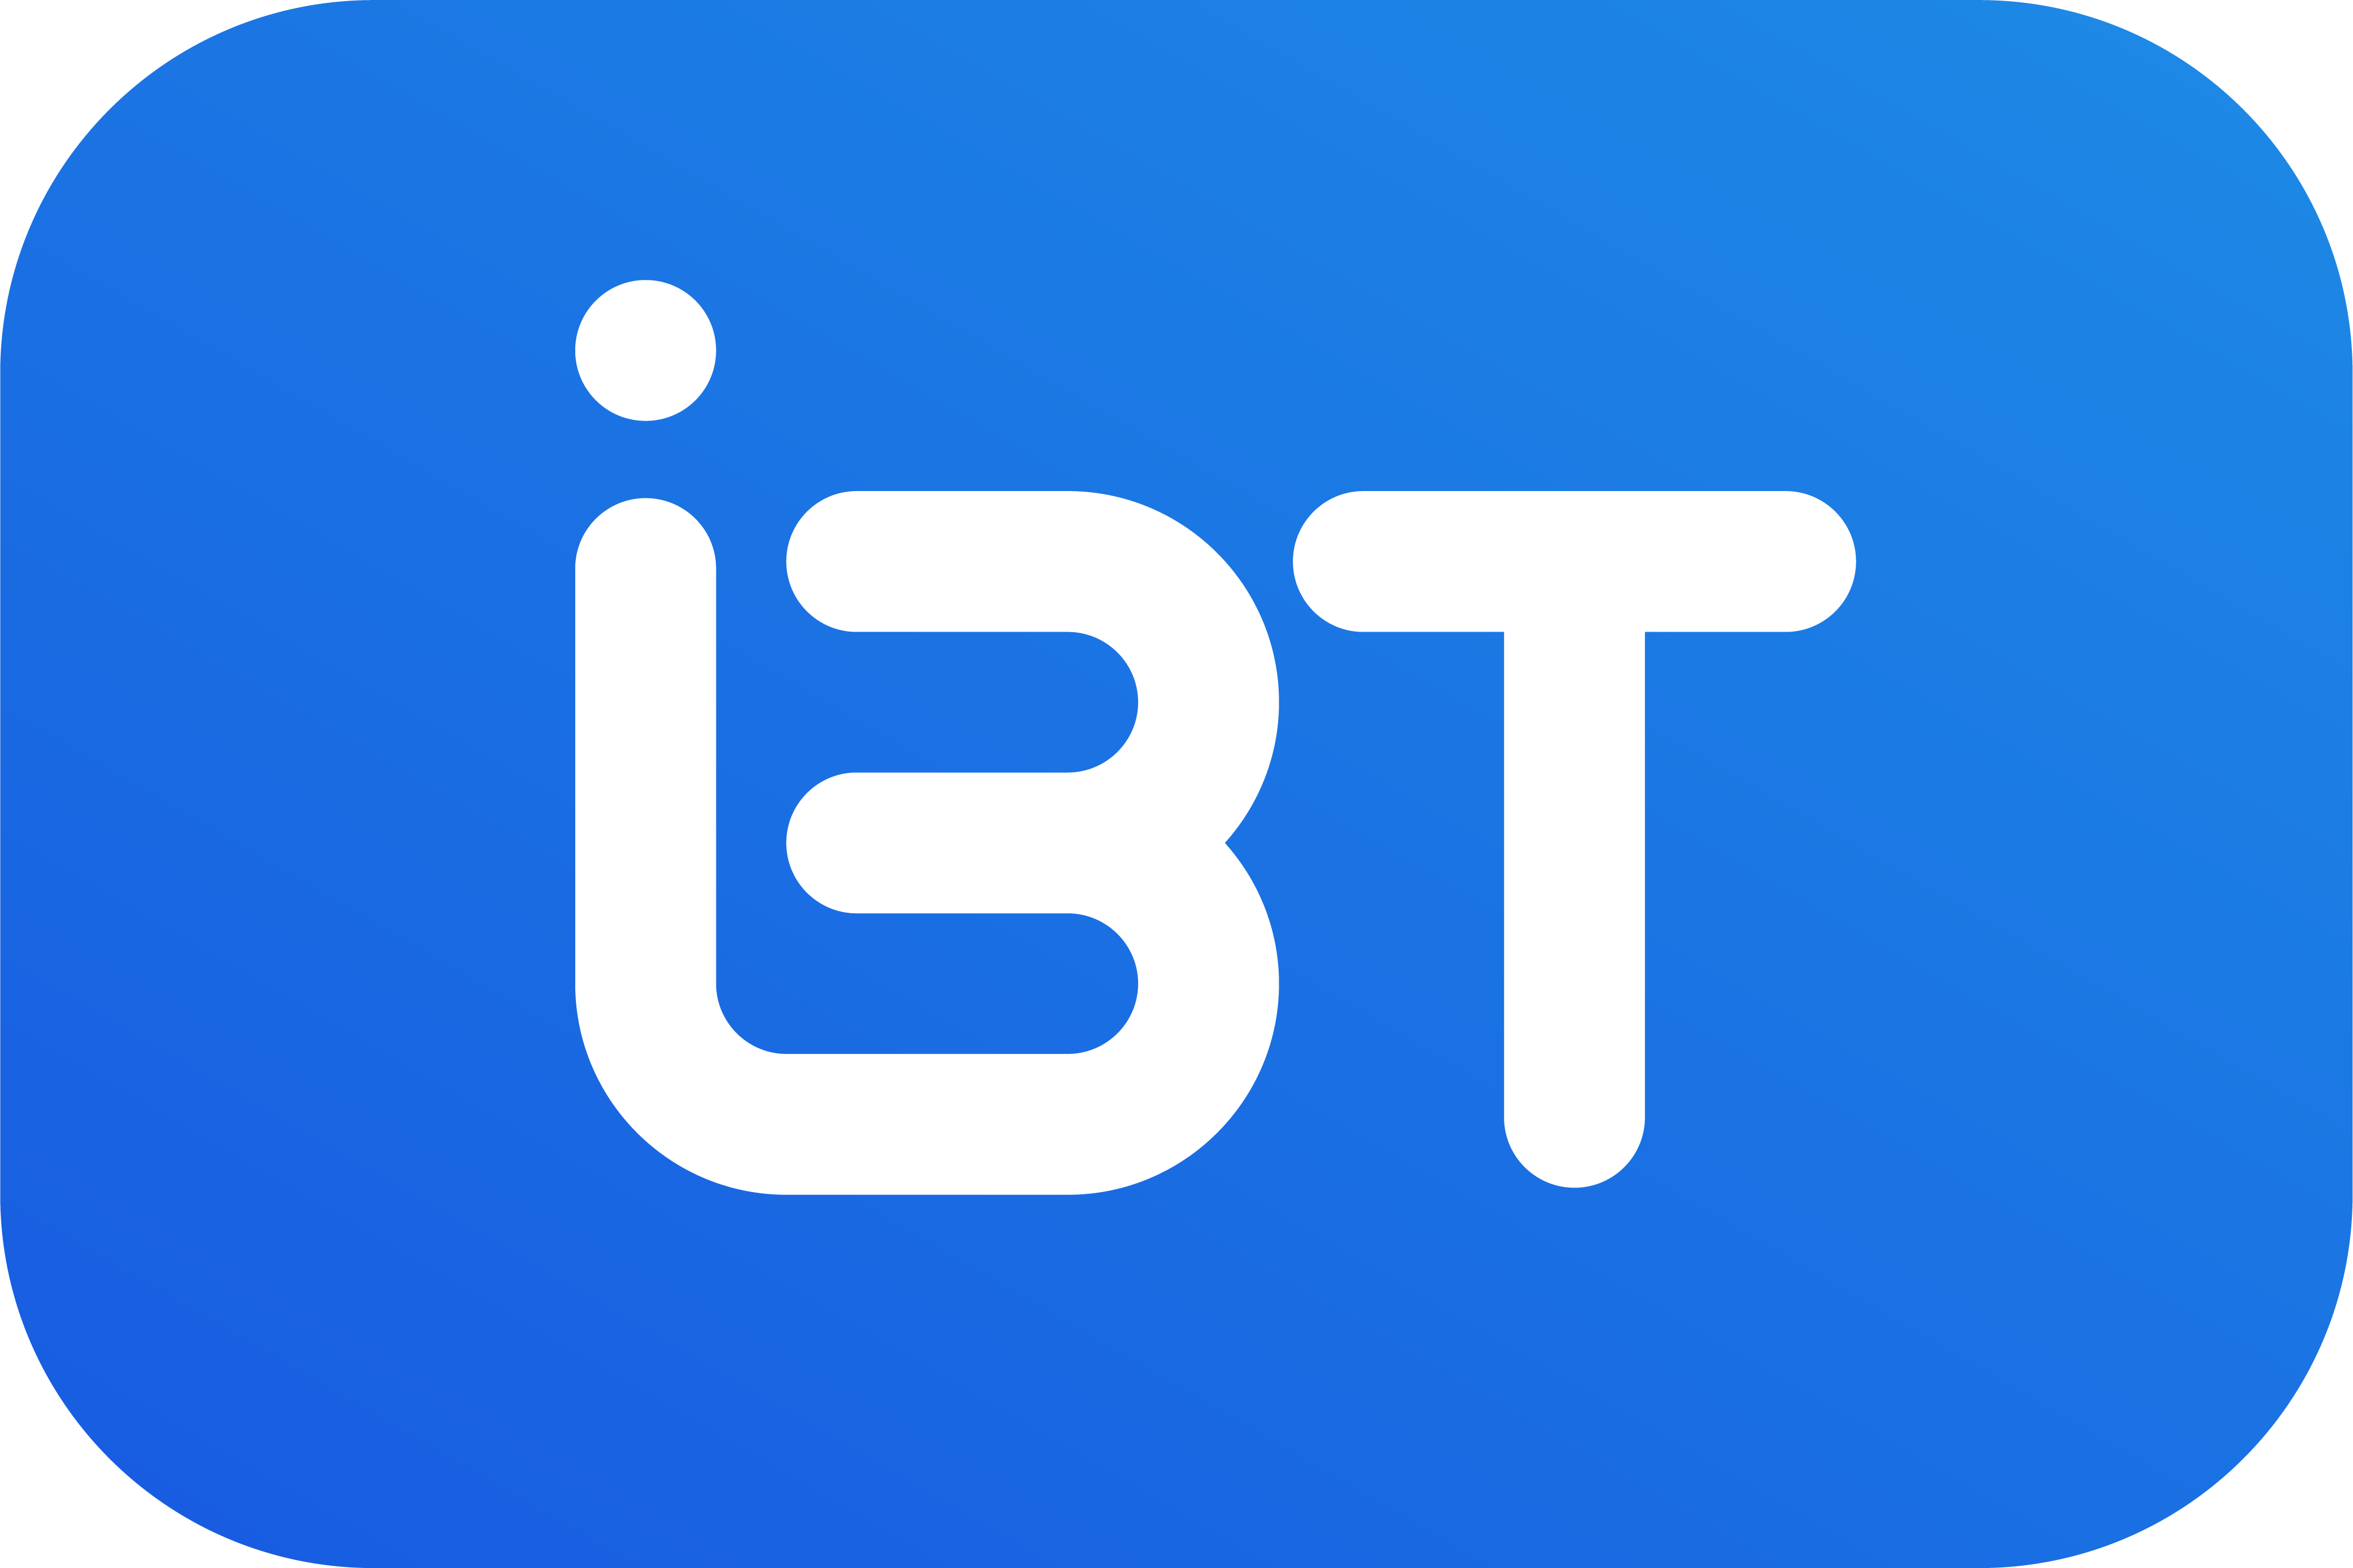 Ibit. Ibit Ltd. Senior Python-Разработчик. Электро ibit. Сеньер Пайтон девелопер.